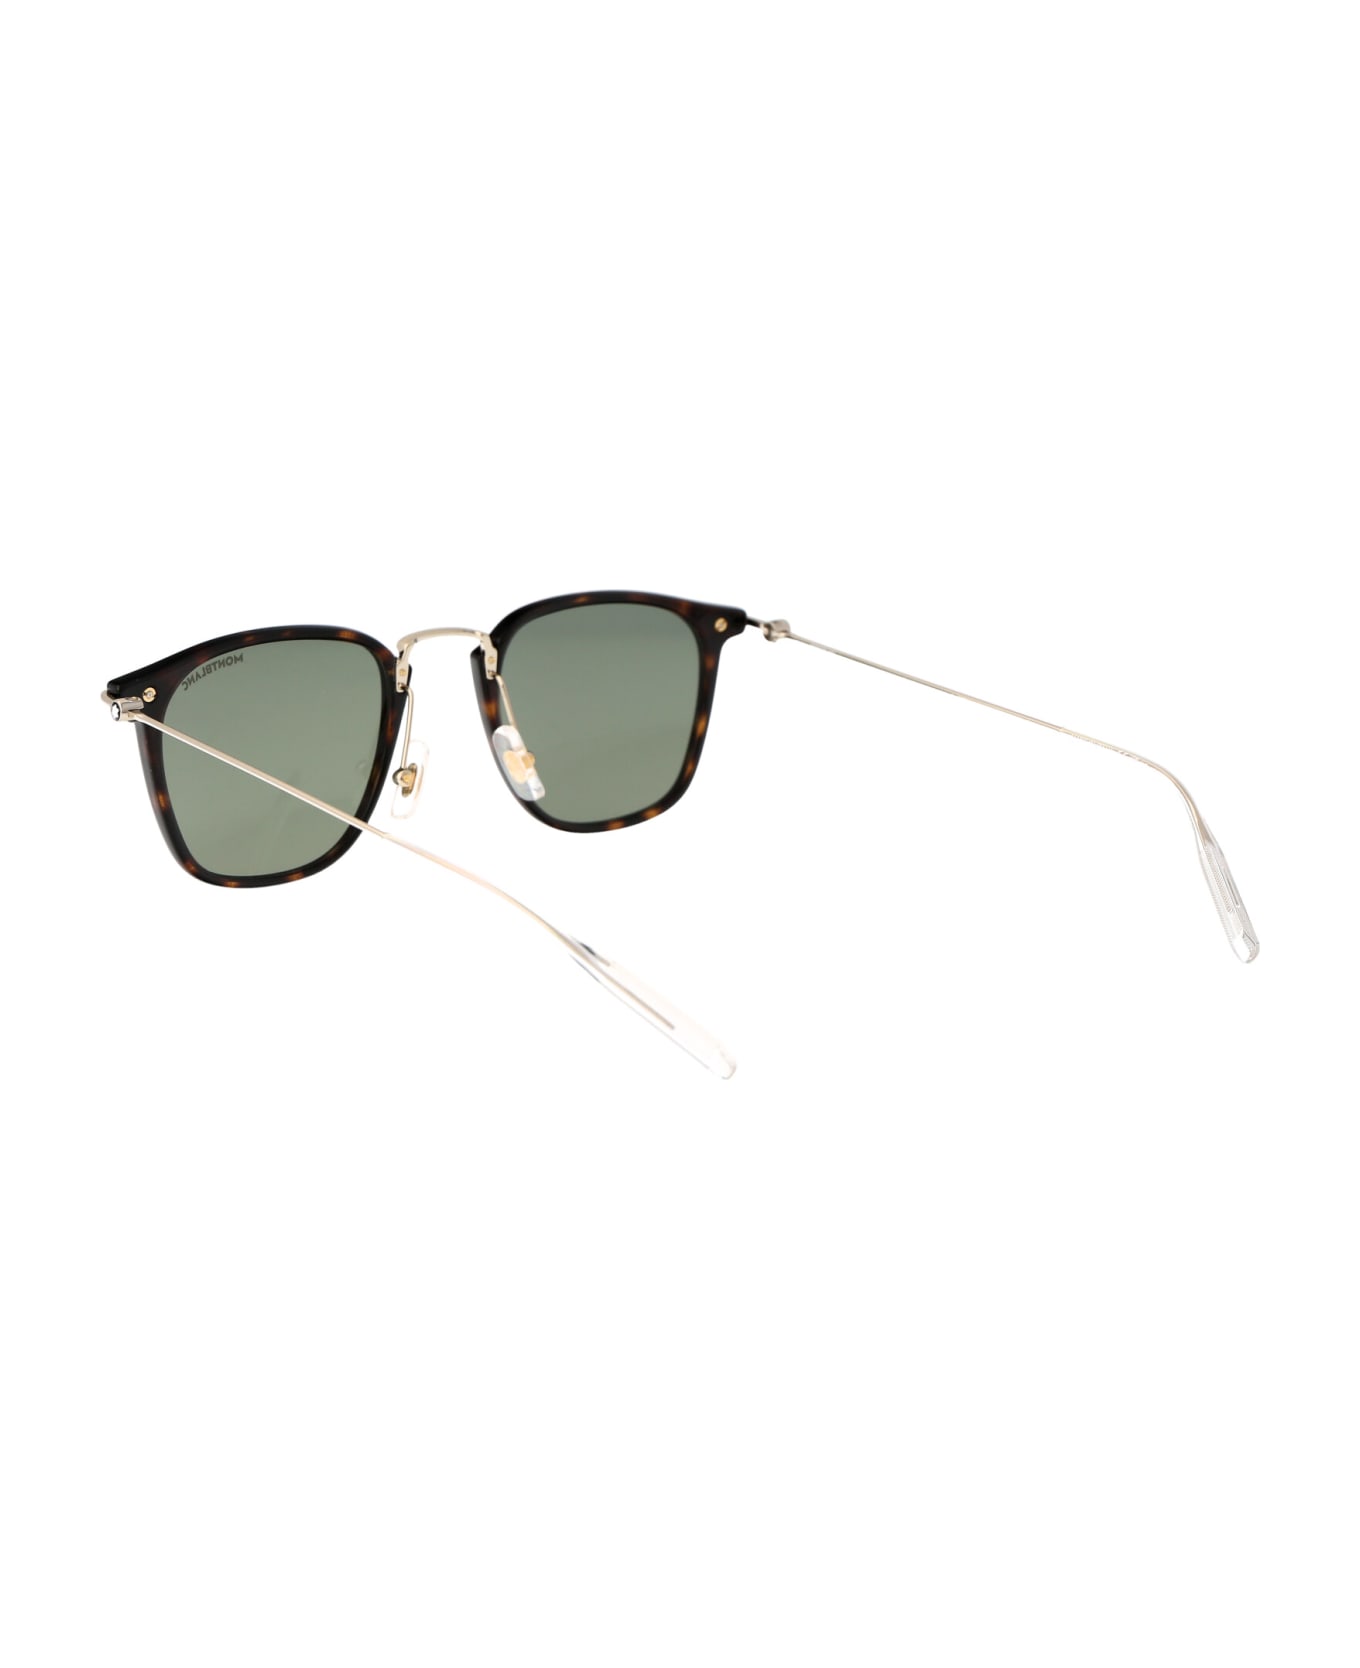 Montblanc Mb0295s Sunglasses - 002 HAVANA GOLD GREEN